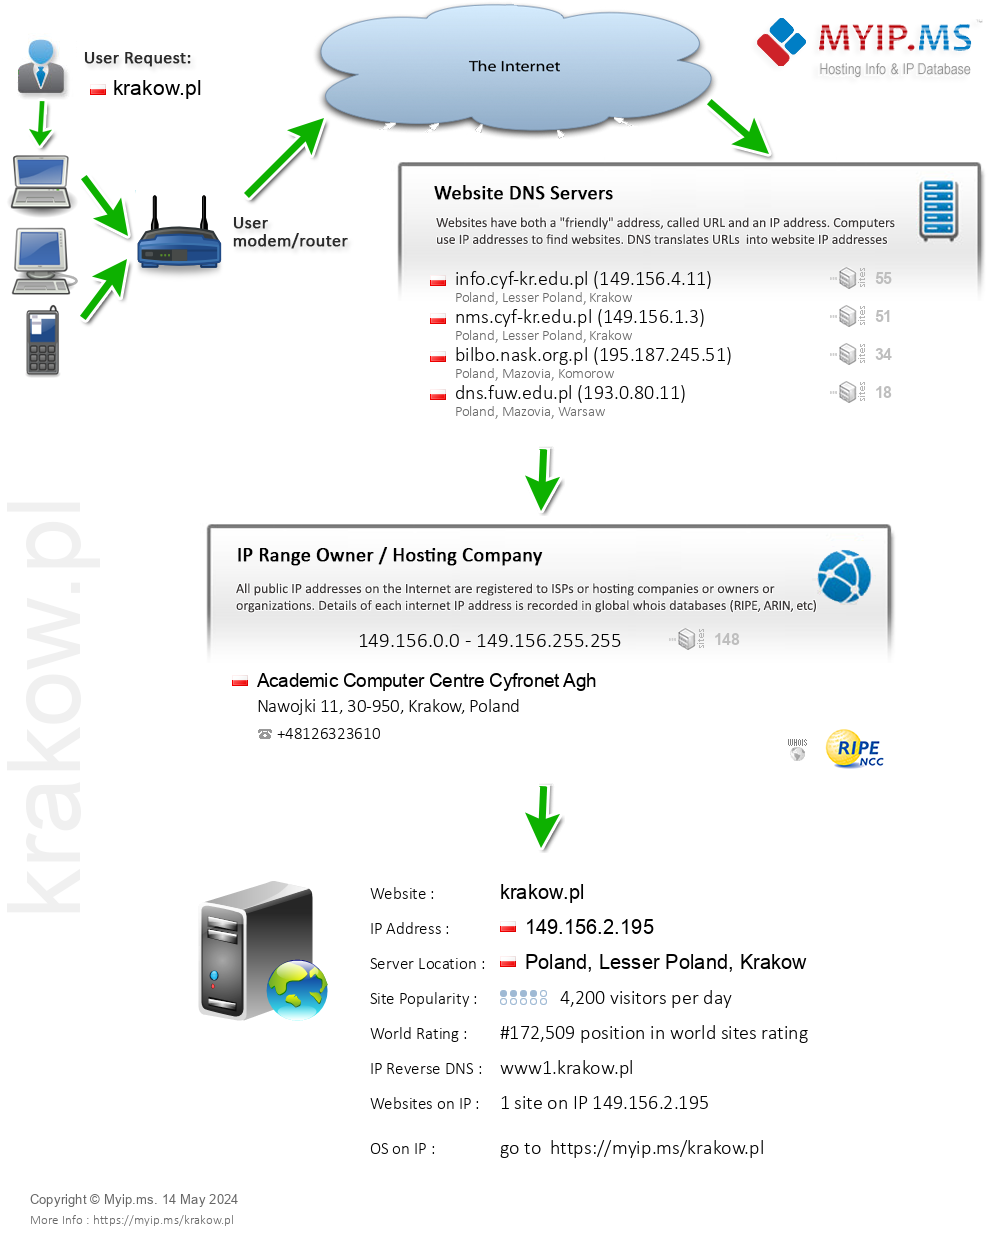 Krakow.pl - Website Hosting Visual IP Diagram